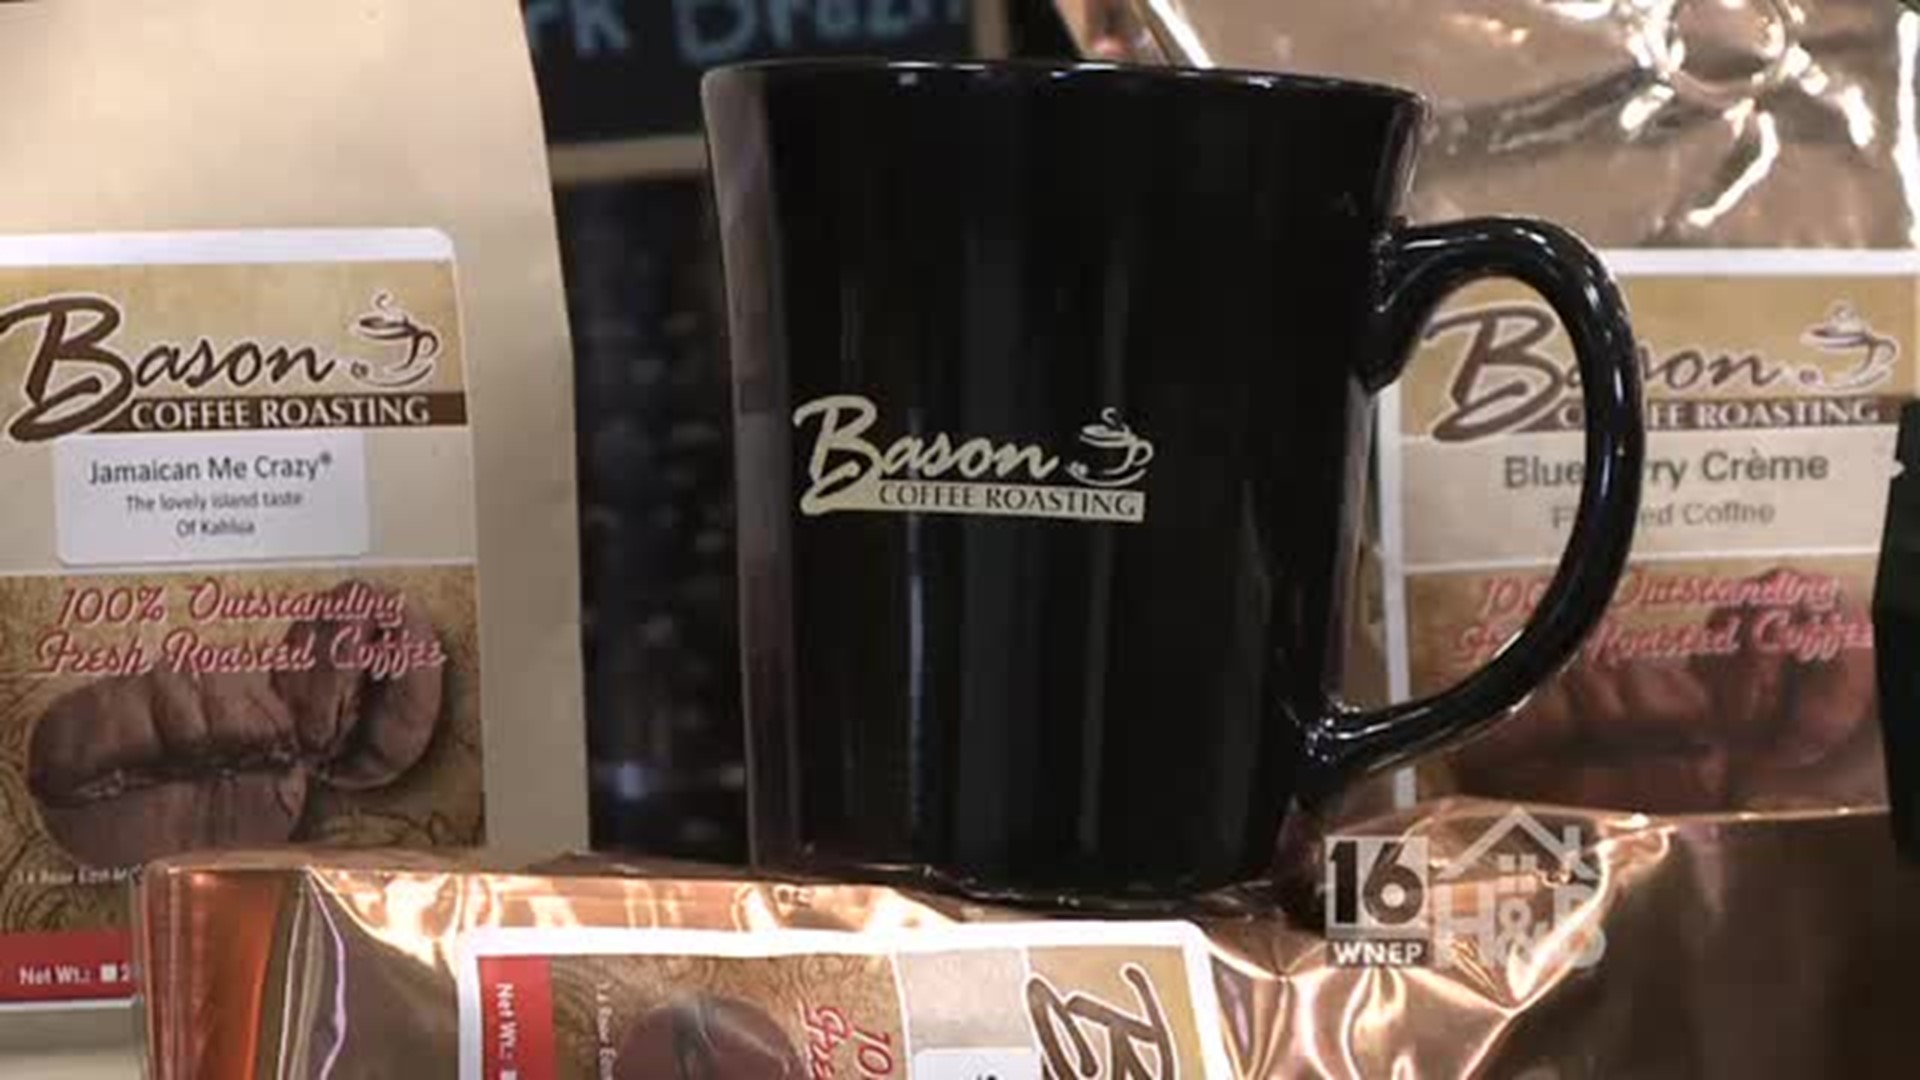 Bason's Coffee Roasting